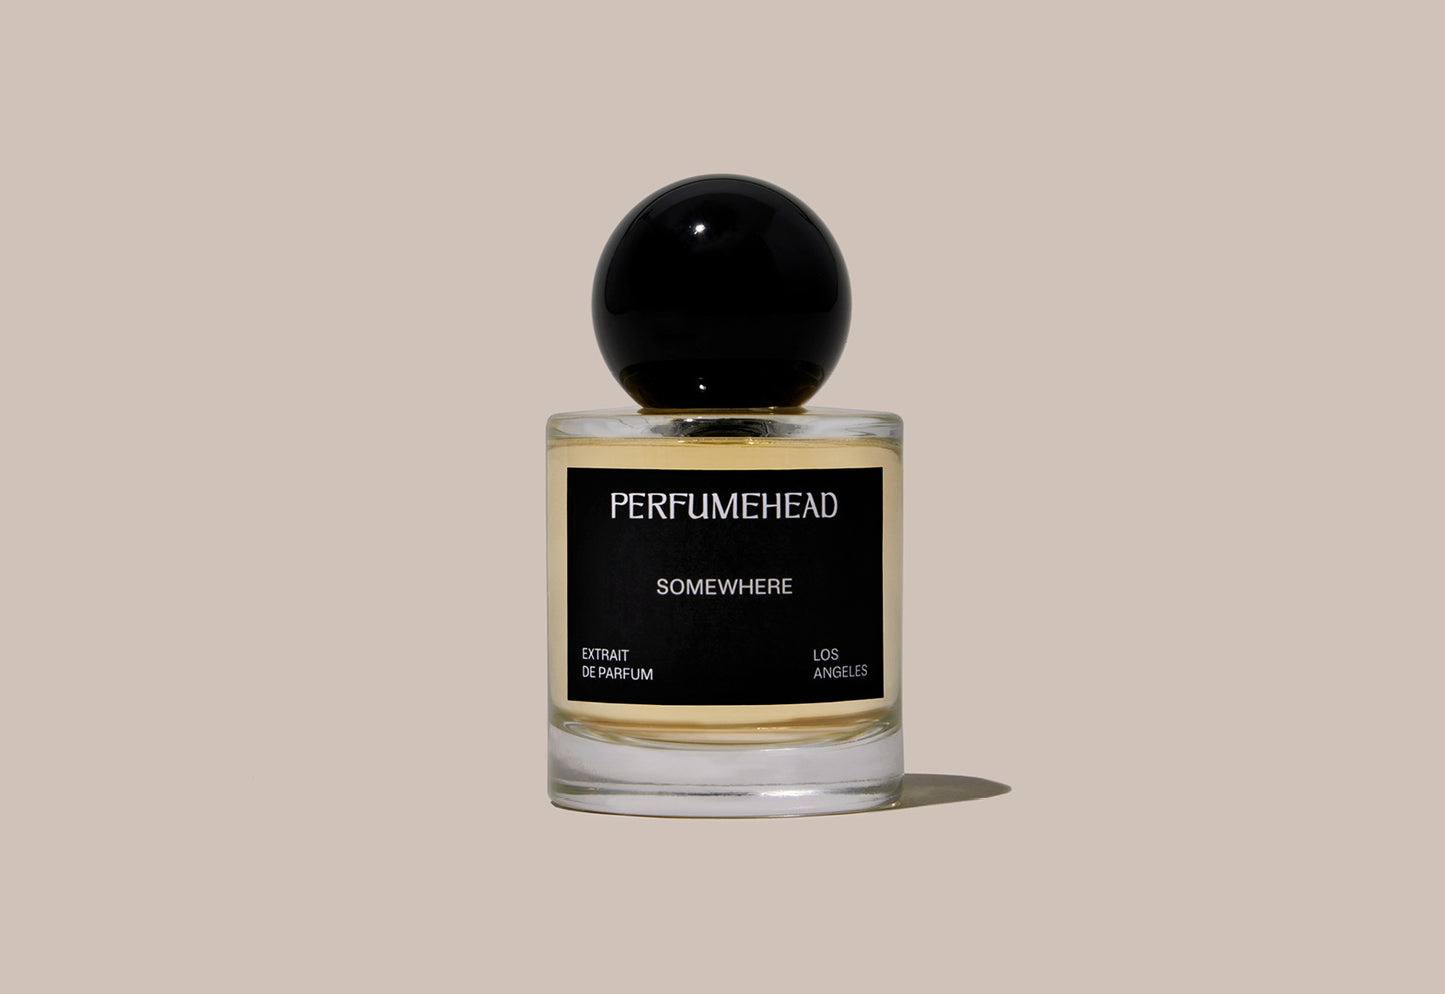 Somewhere by Perfumehead. Extrait de Parfum.